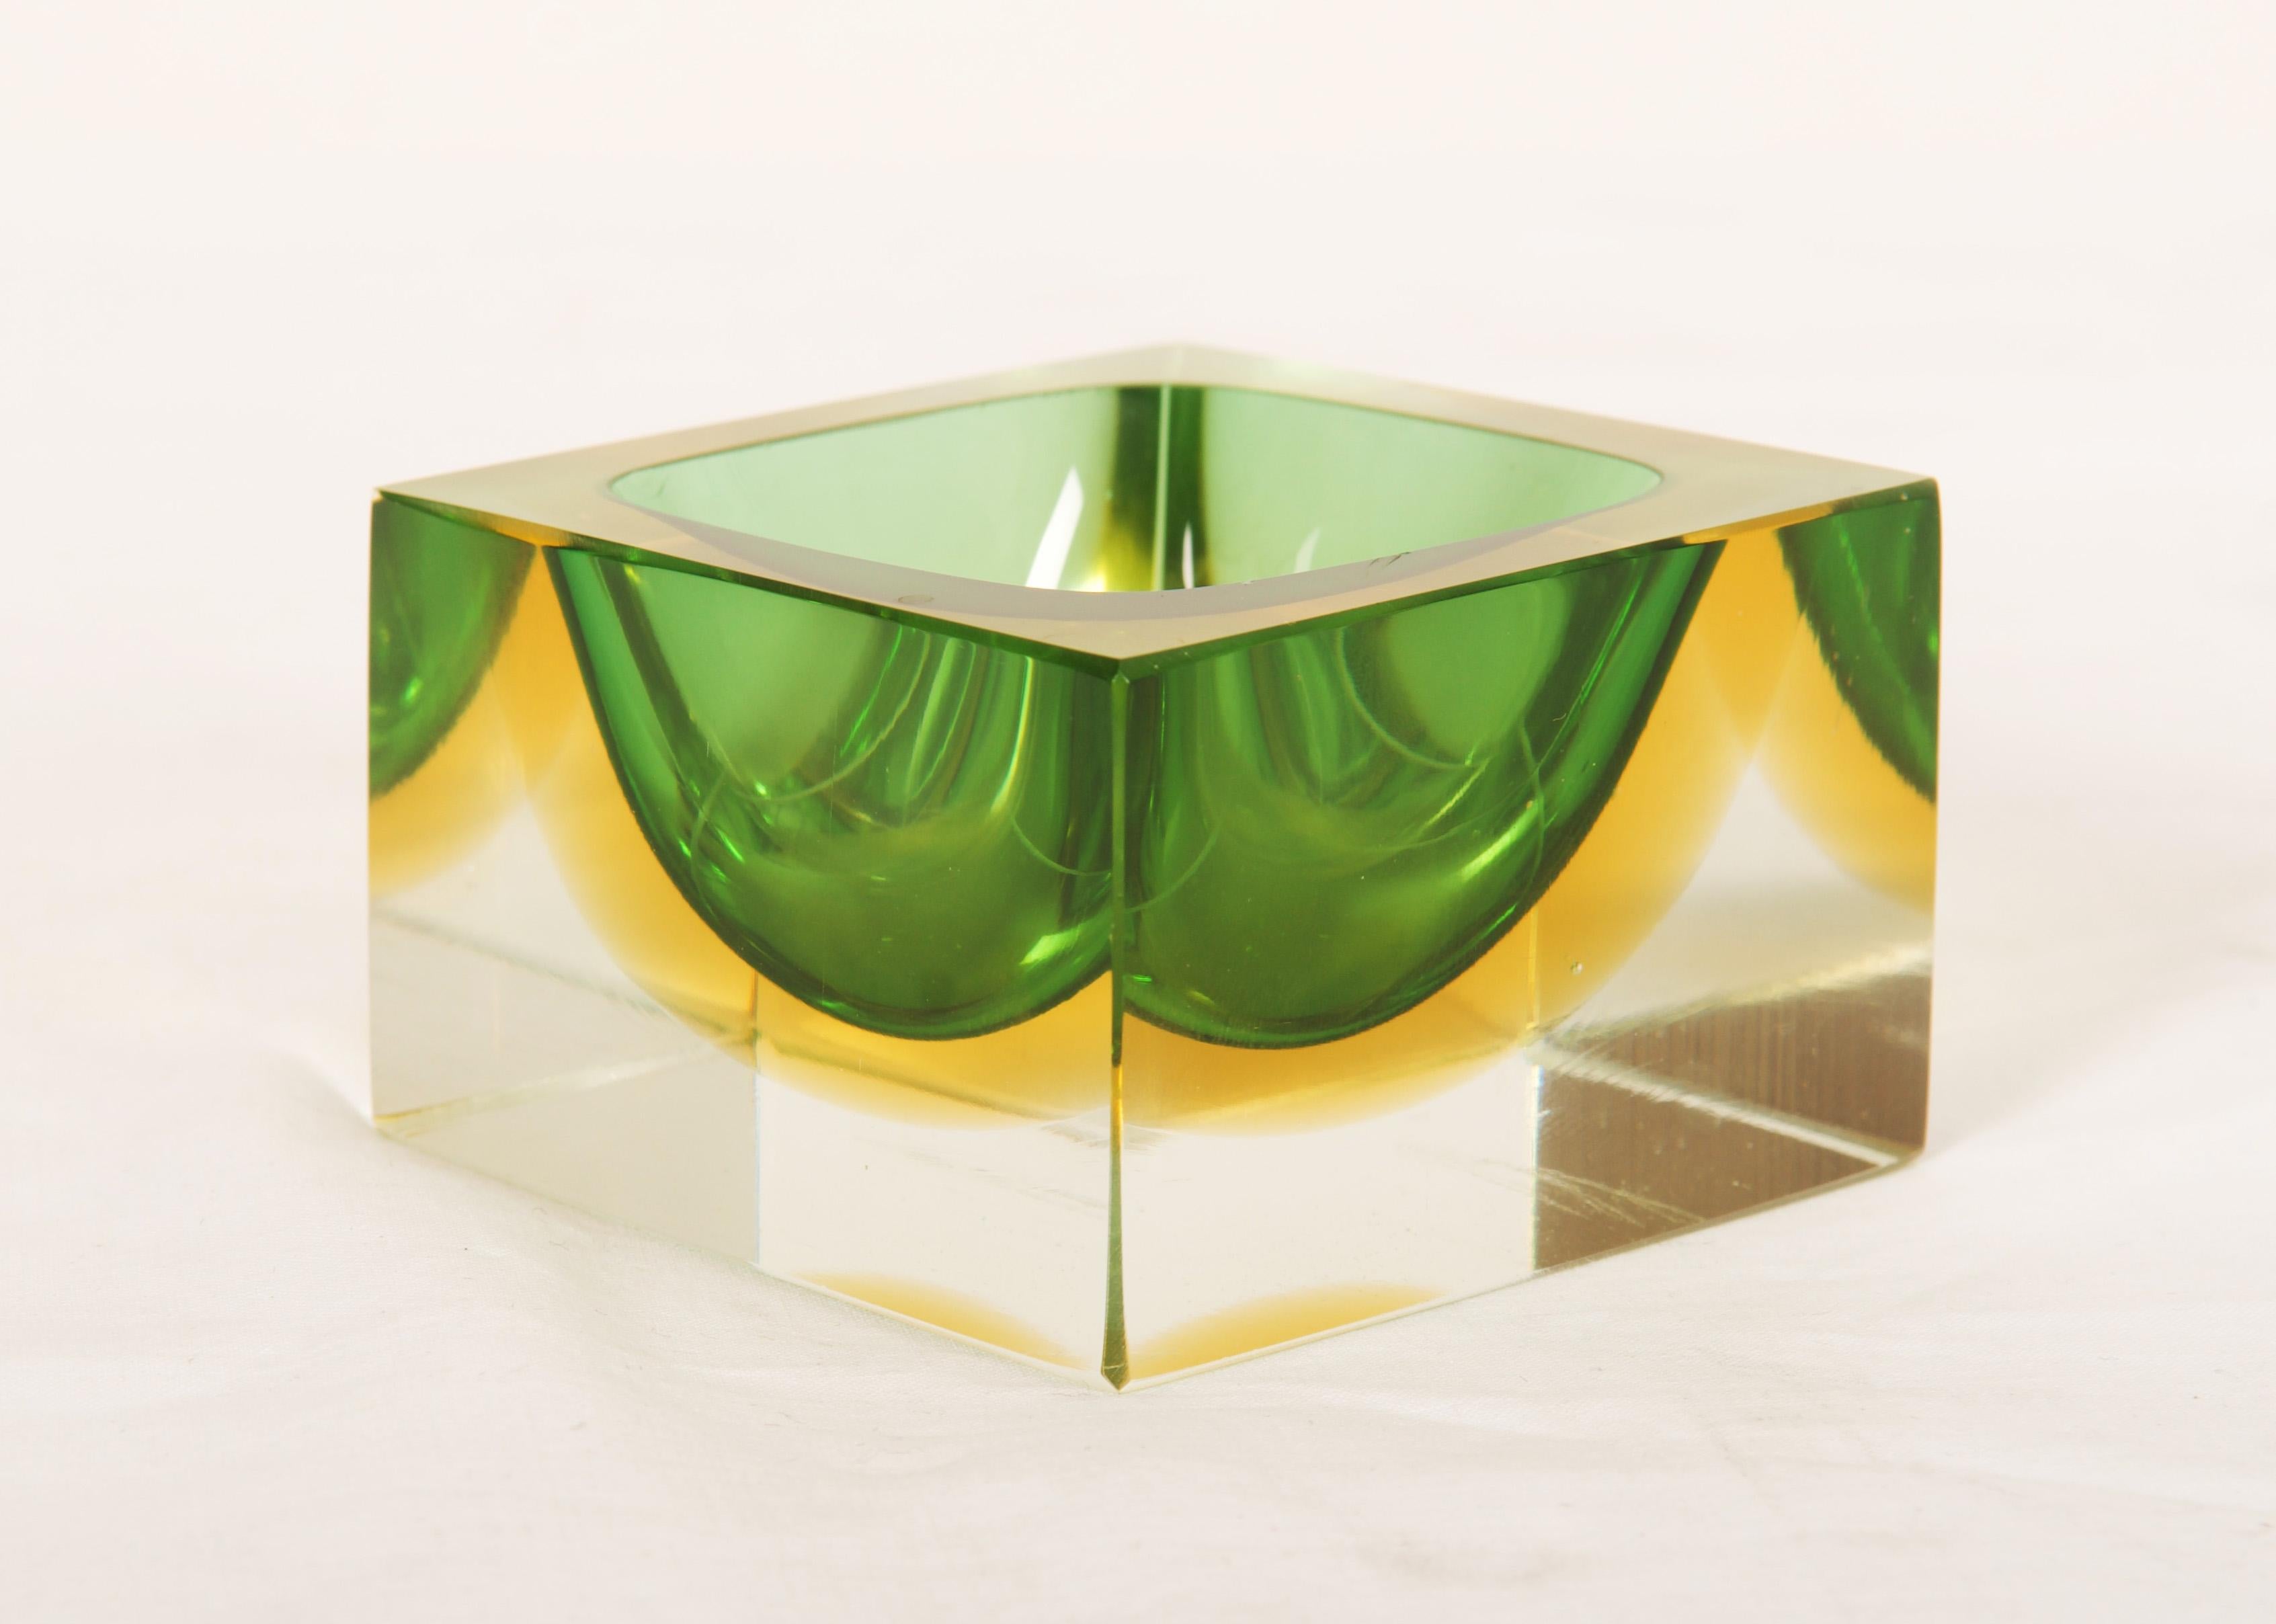 Green/yellow art glass bowl, ashtray designed in the 1970s in Italy by Fravio Poli for Seguso Vetri d'Arte.